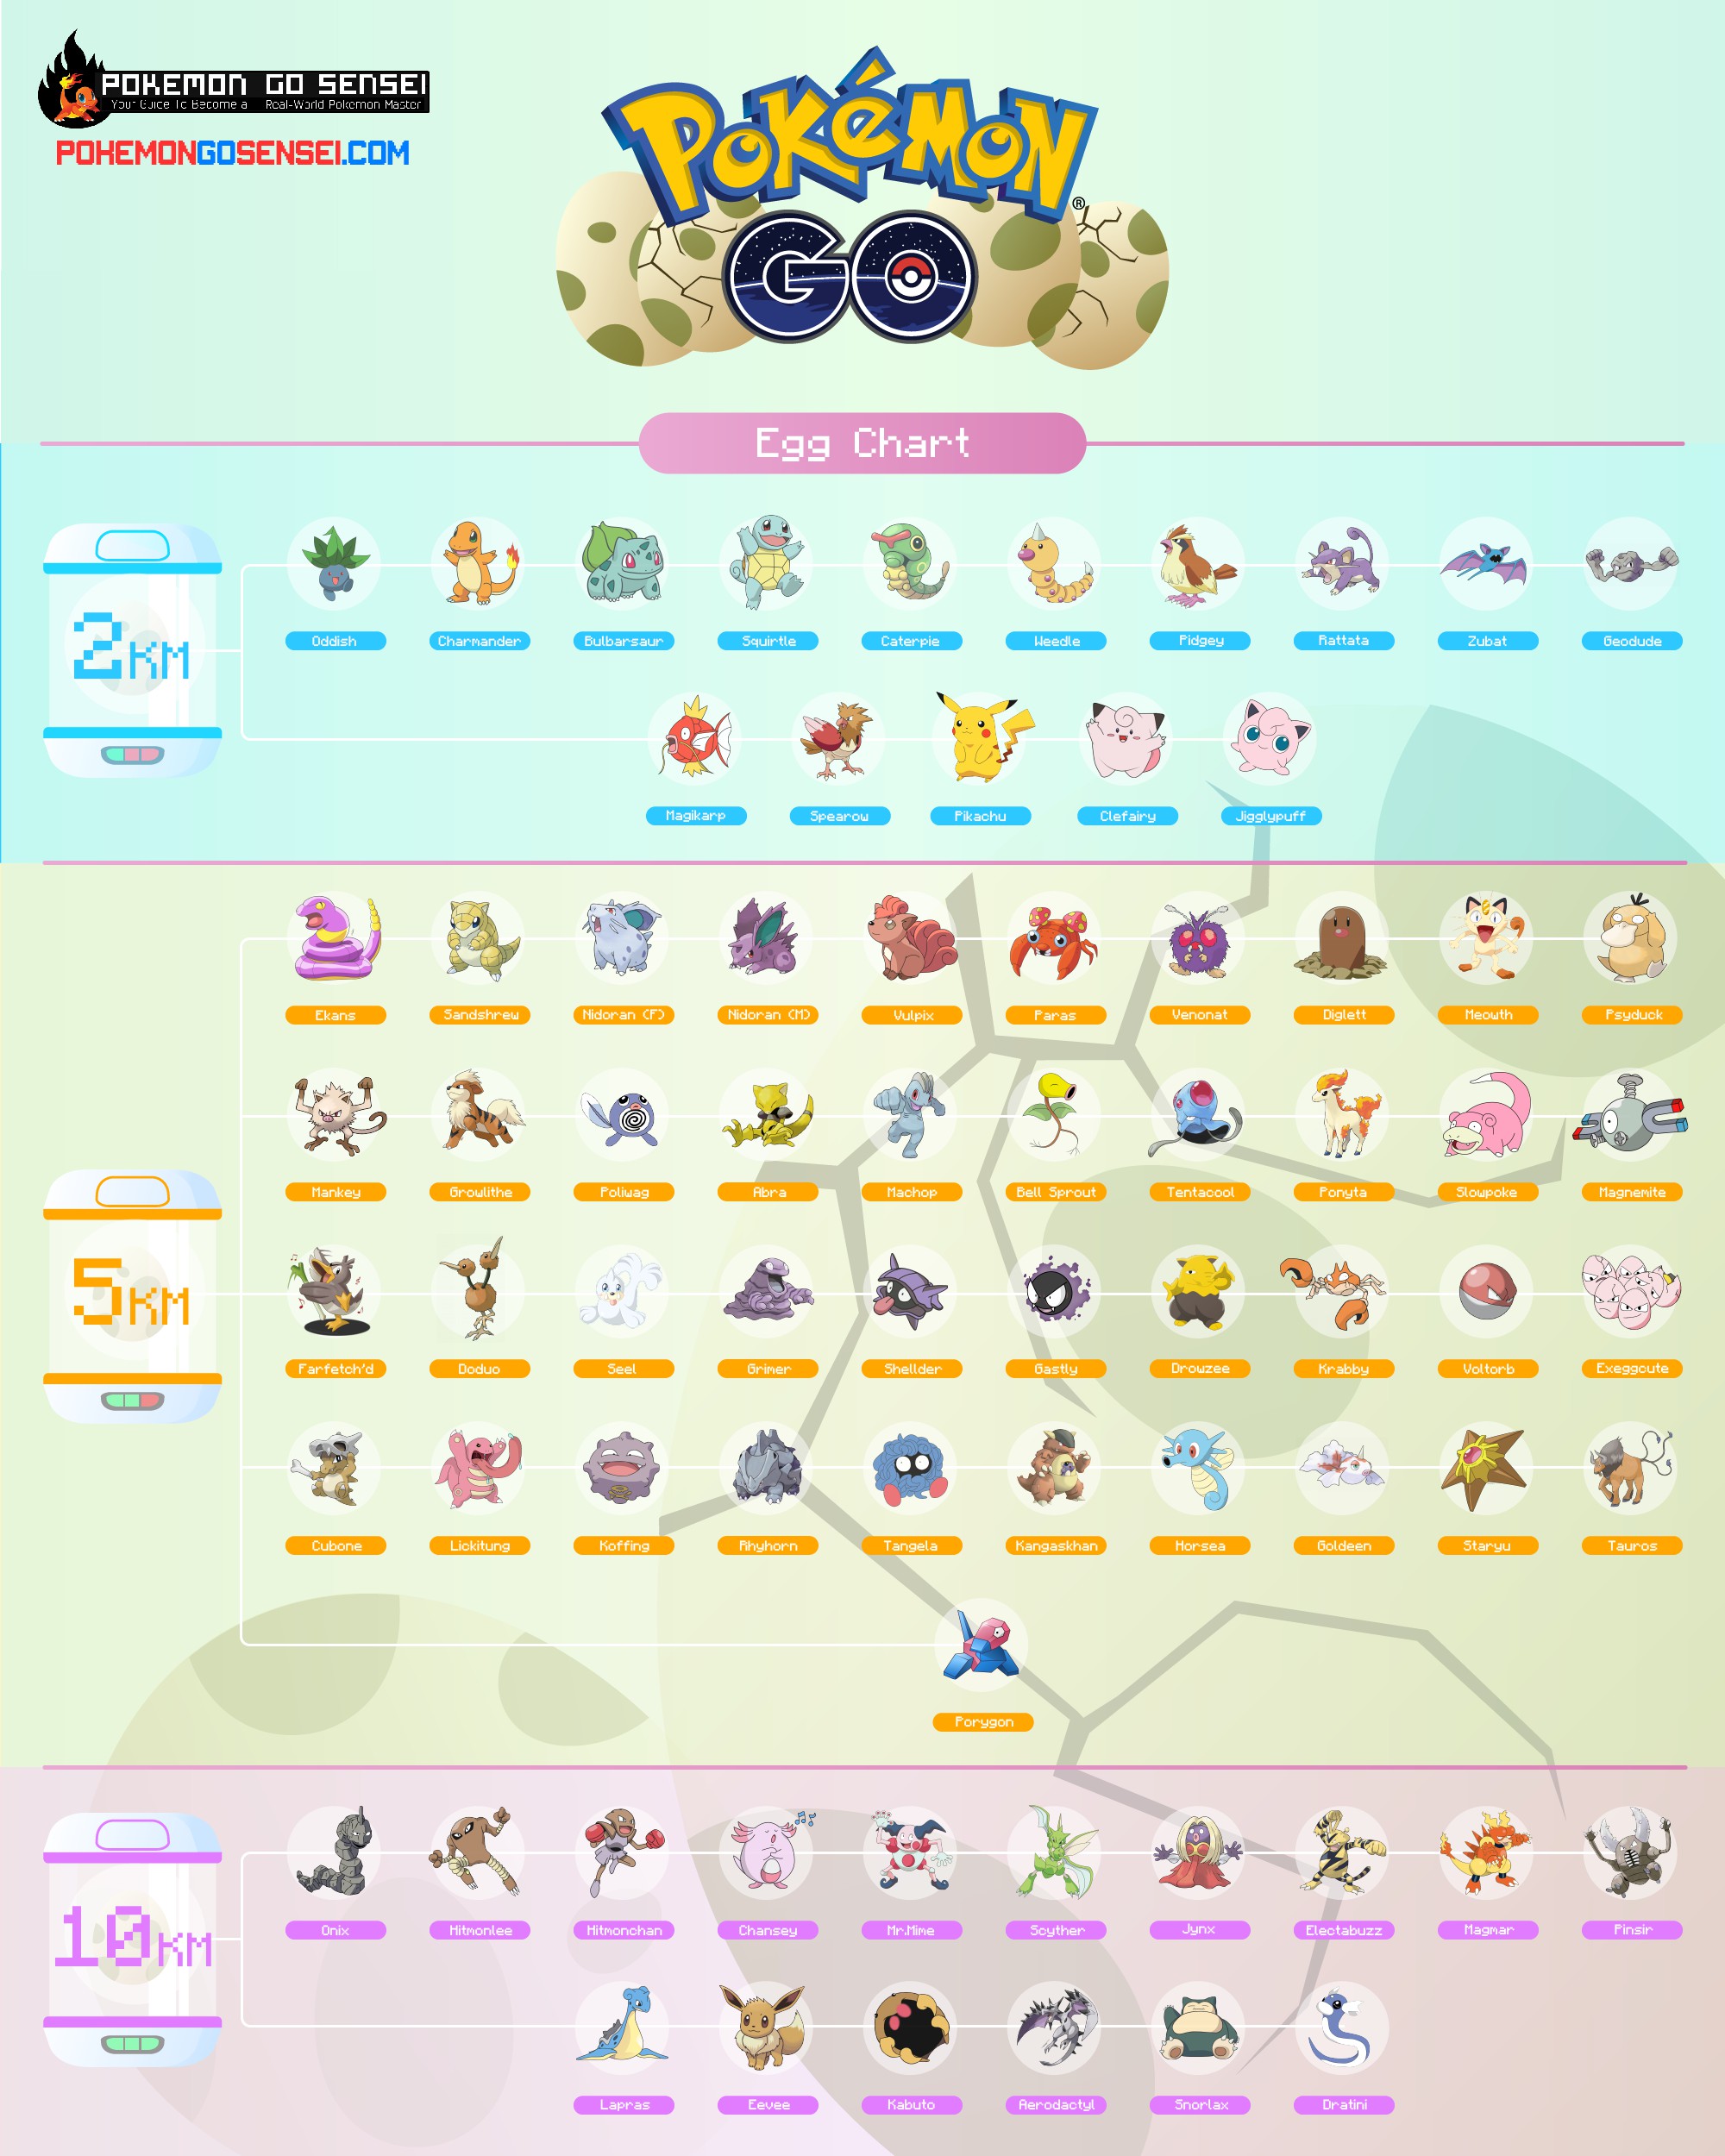 Pokemon Go Egg Chart The Ultimate Guide To Hatching Eggs Pokemon Go Sensei